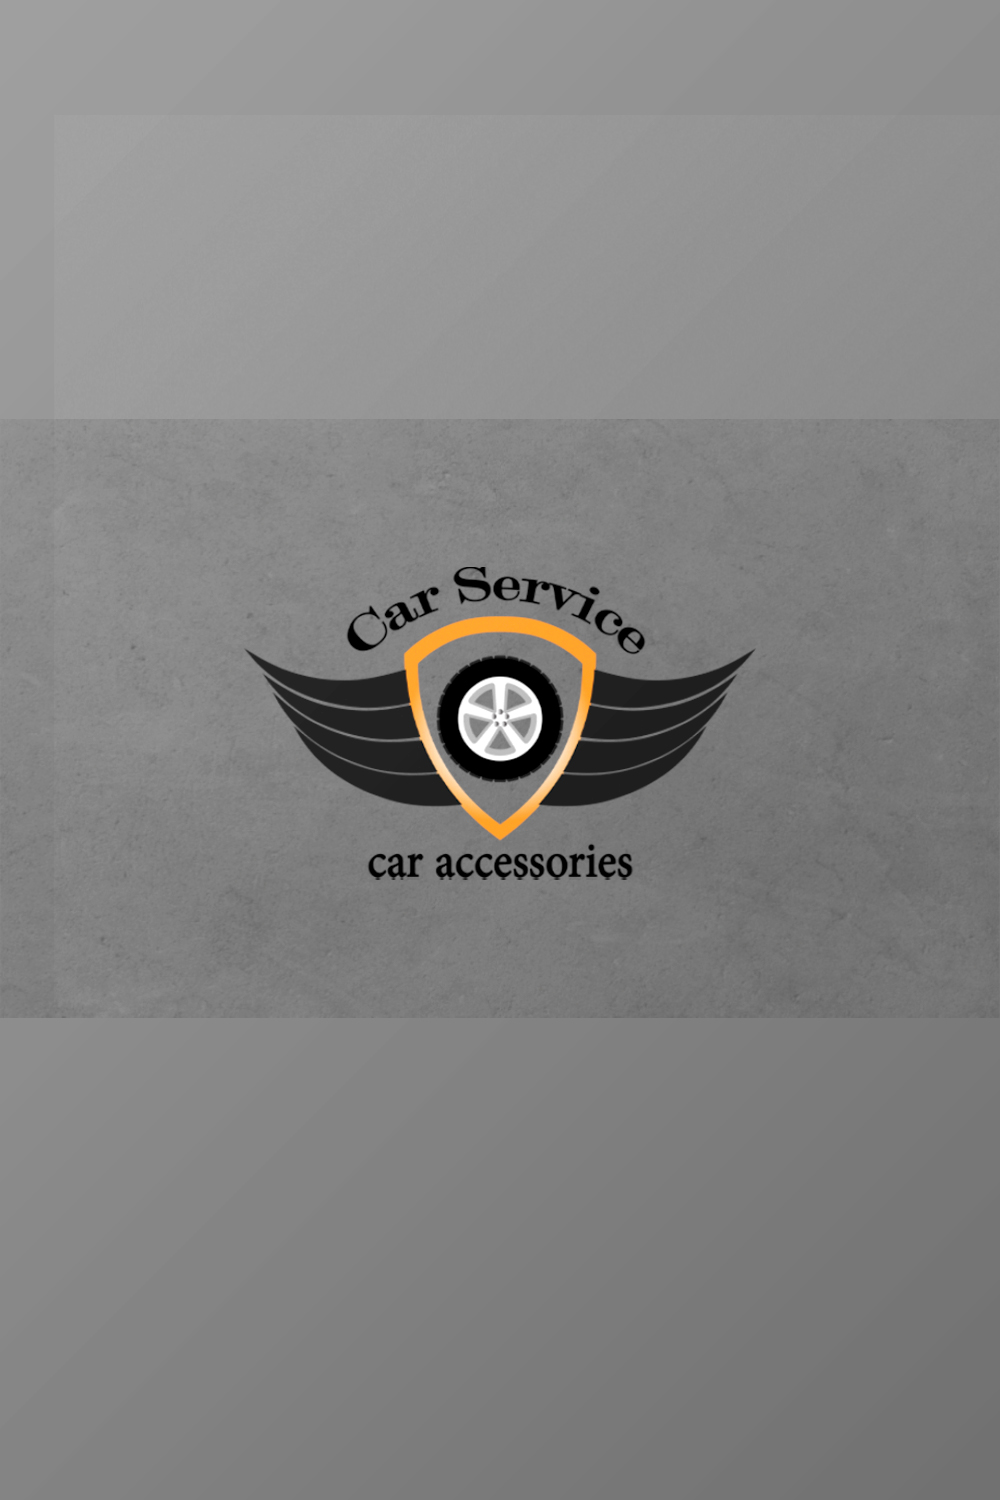 Car Service Logo Templates pinterest image.